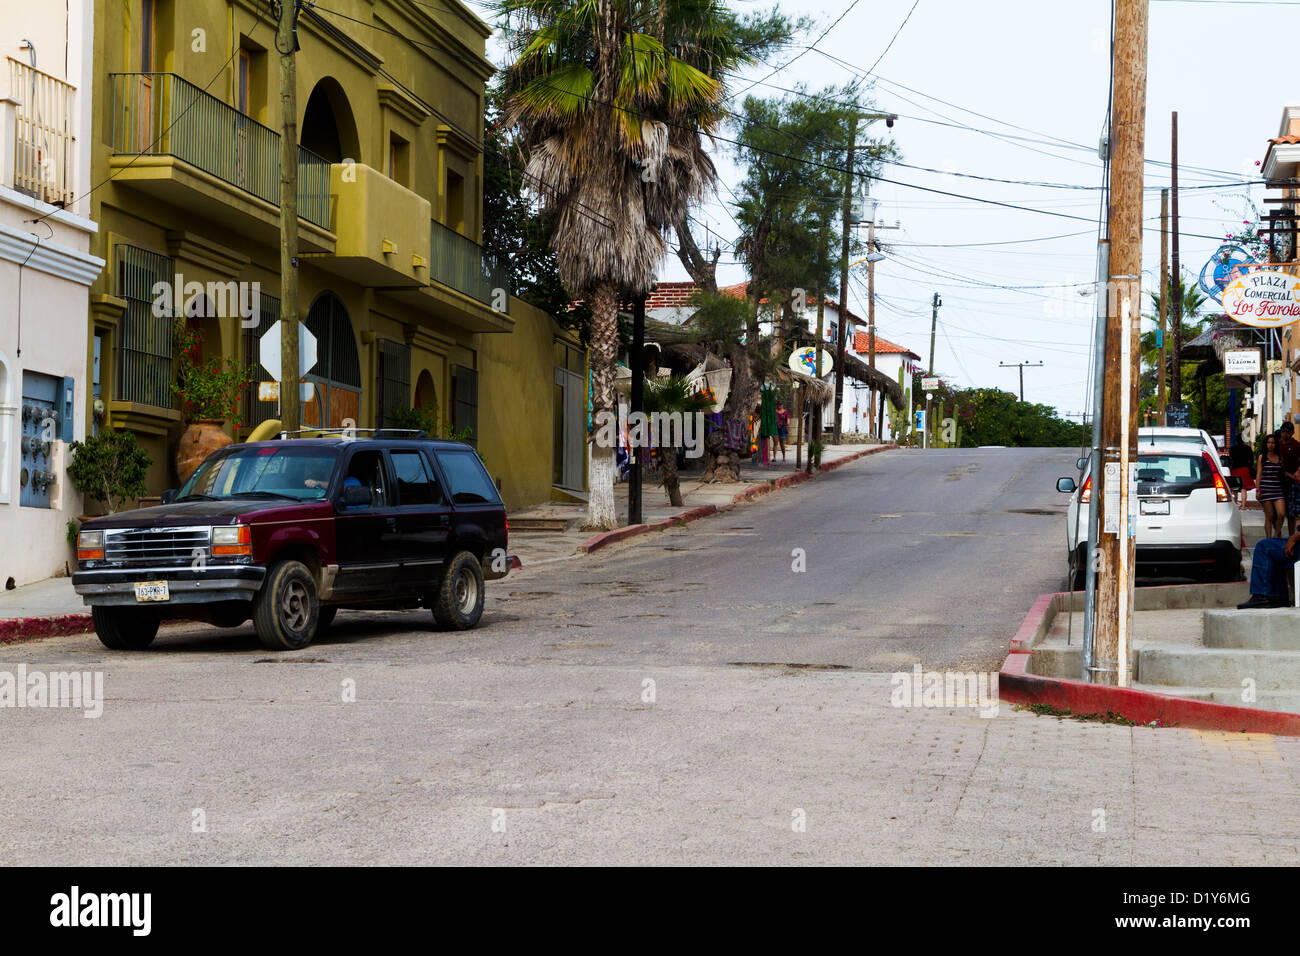 Street scene in Todos Santos, Baja, Mexico Stock Photo